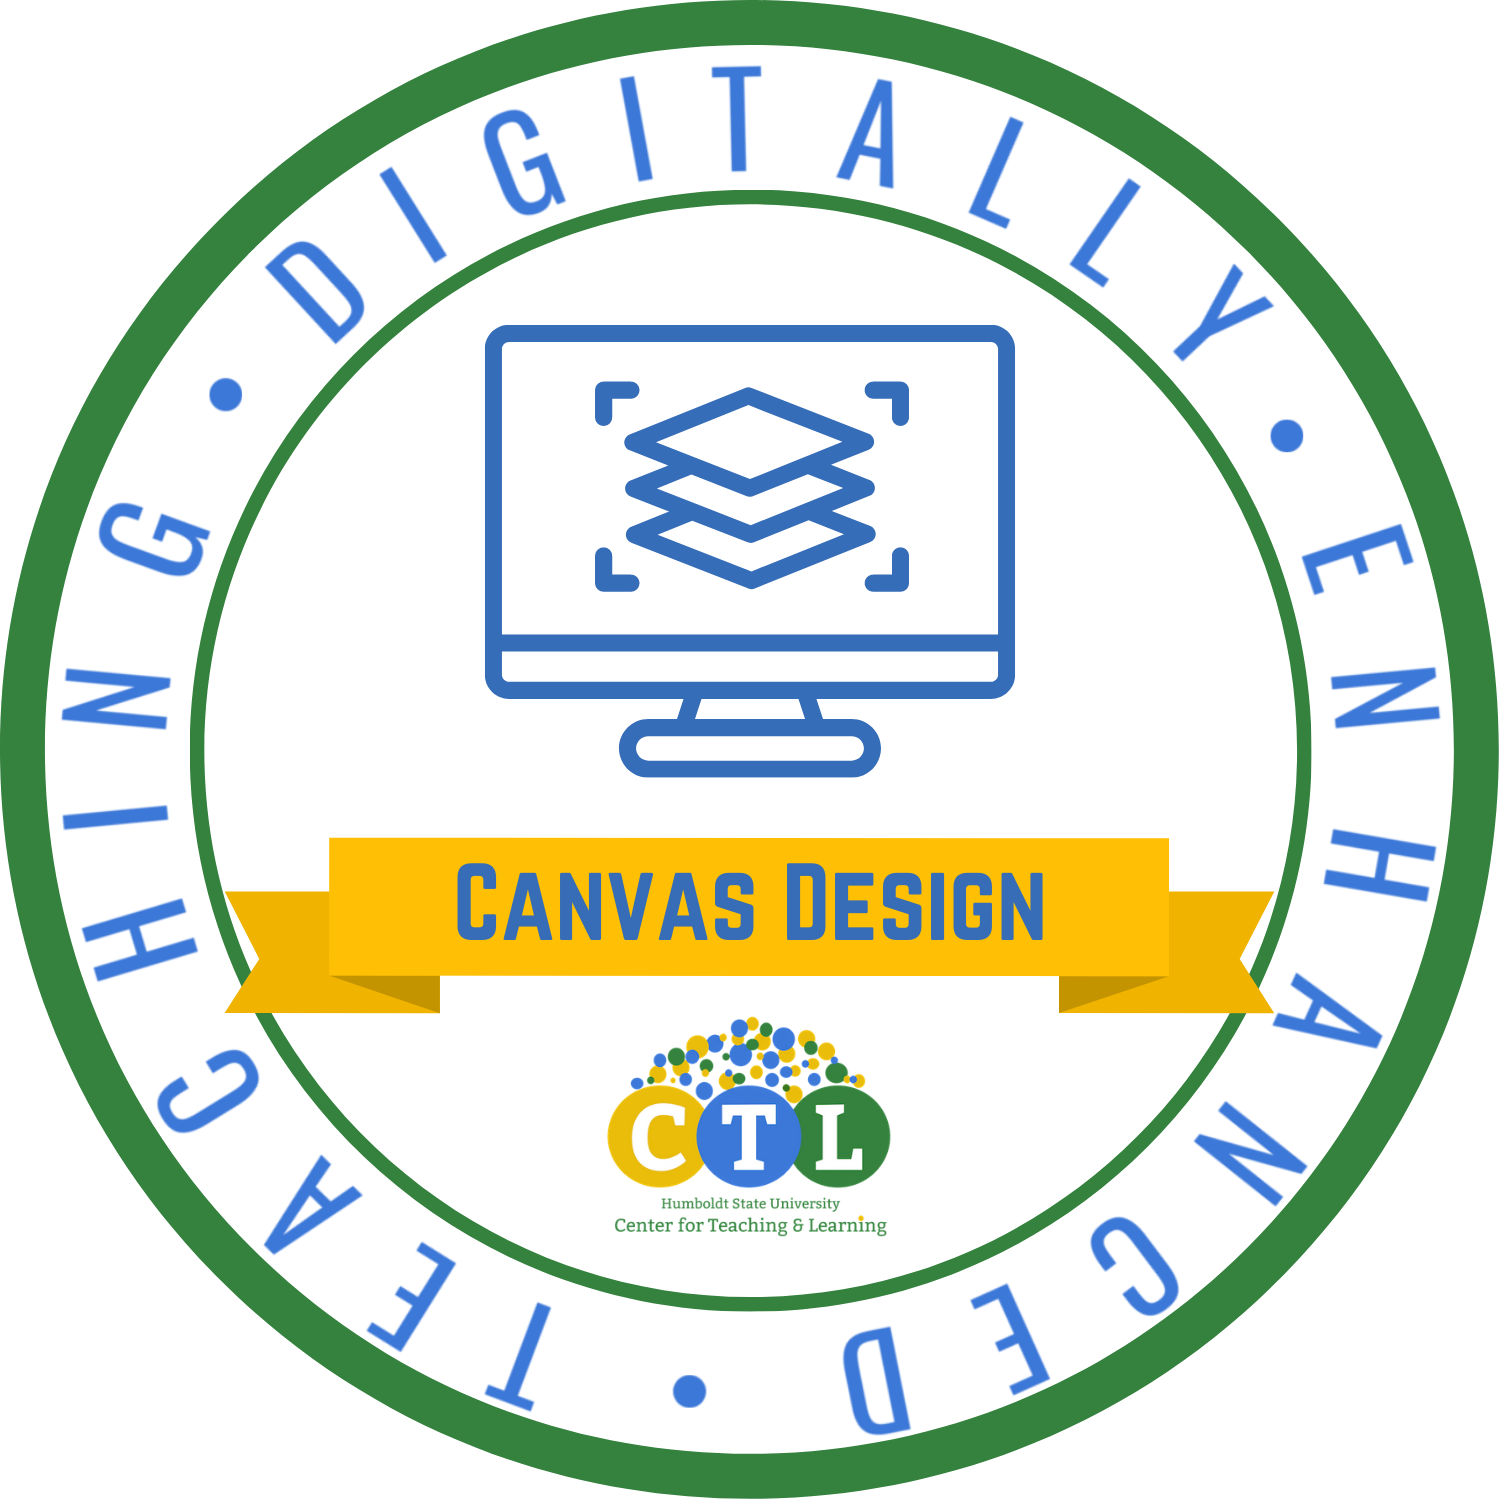 Digitally Enhanced Teaching: Canvas Design